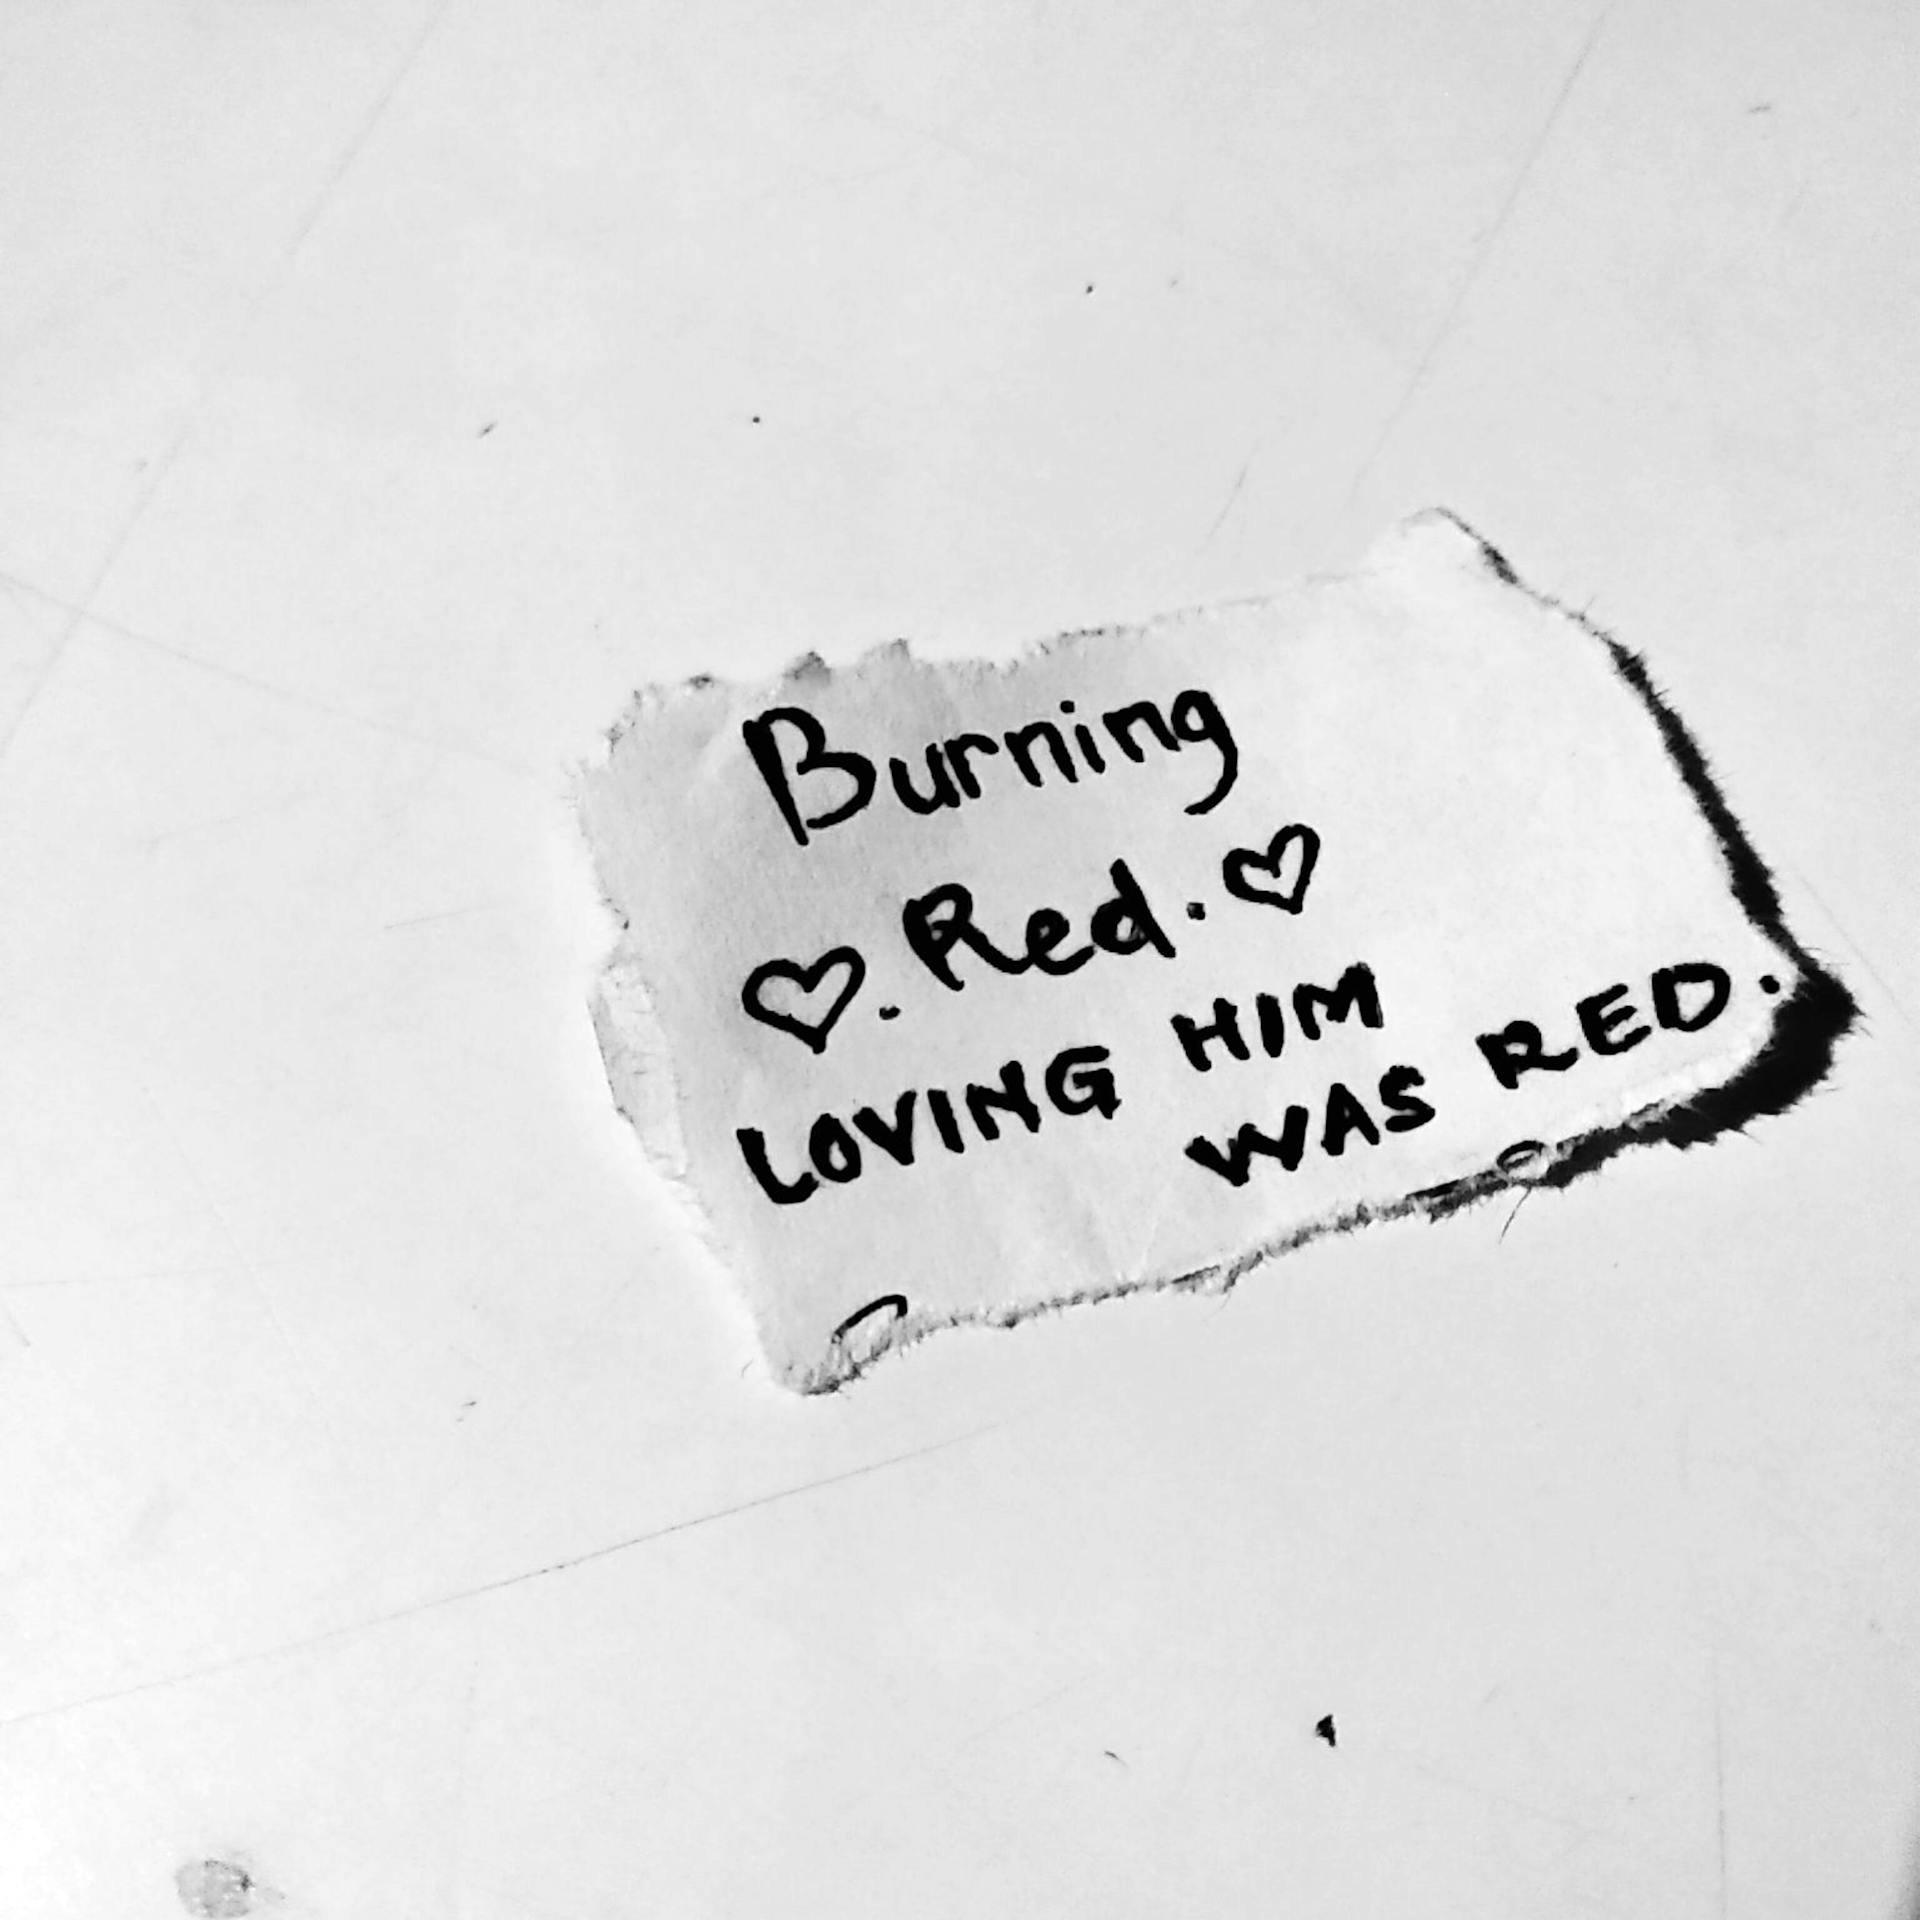 Un mensaje escrito a mano en un trozo de papel | Foto: Pexels